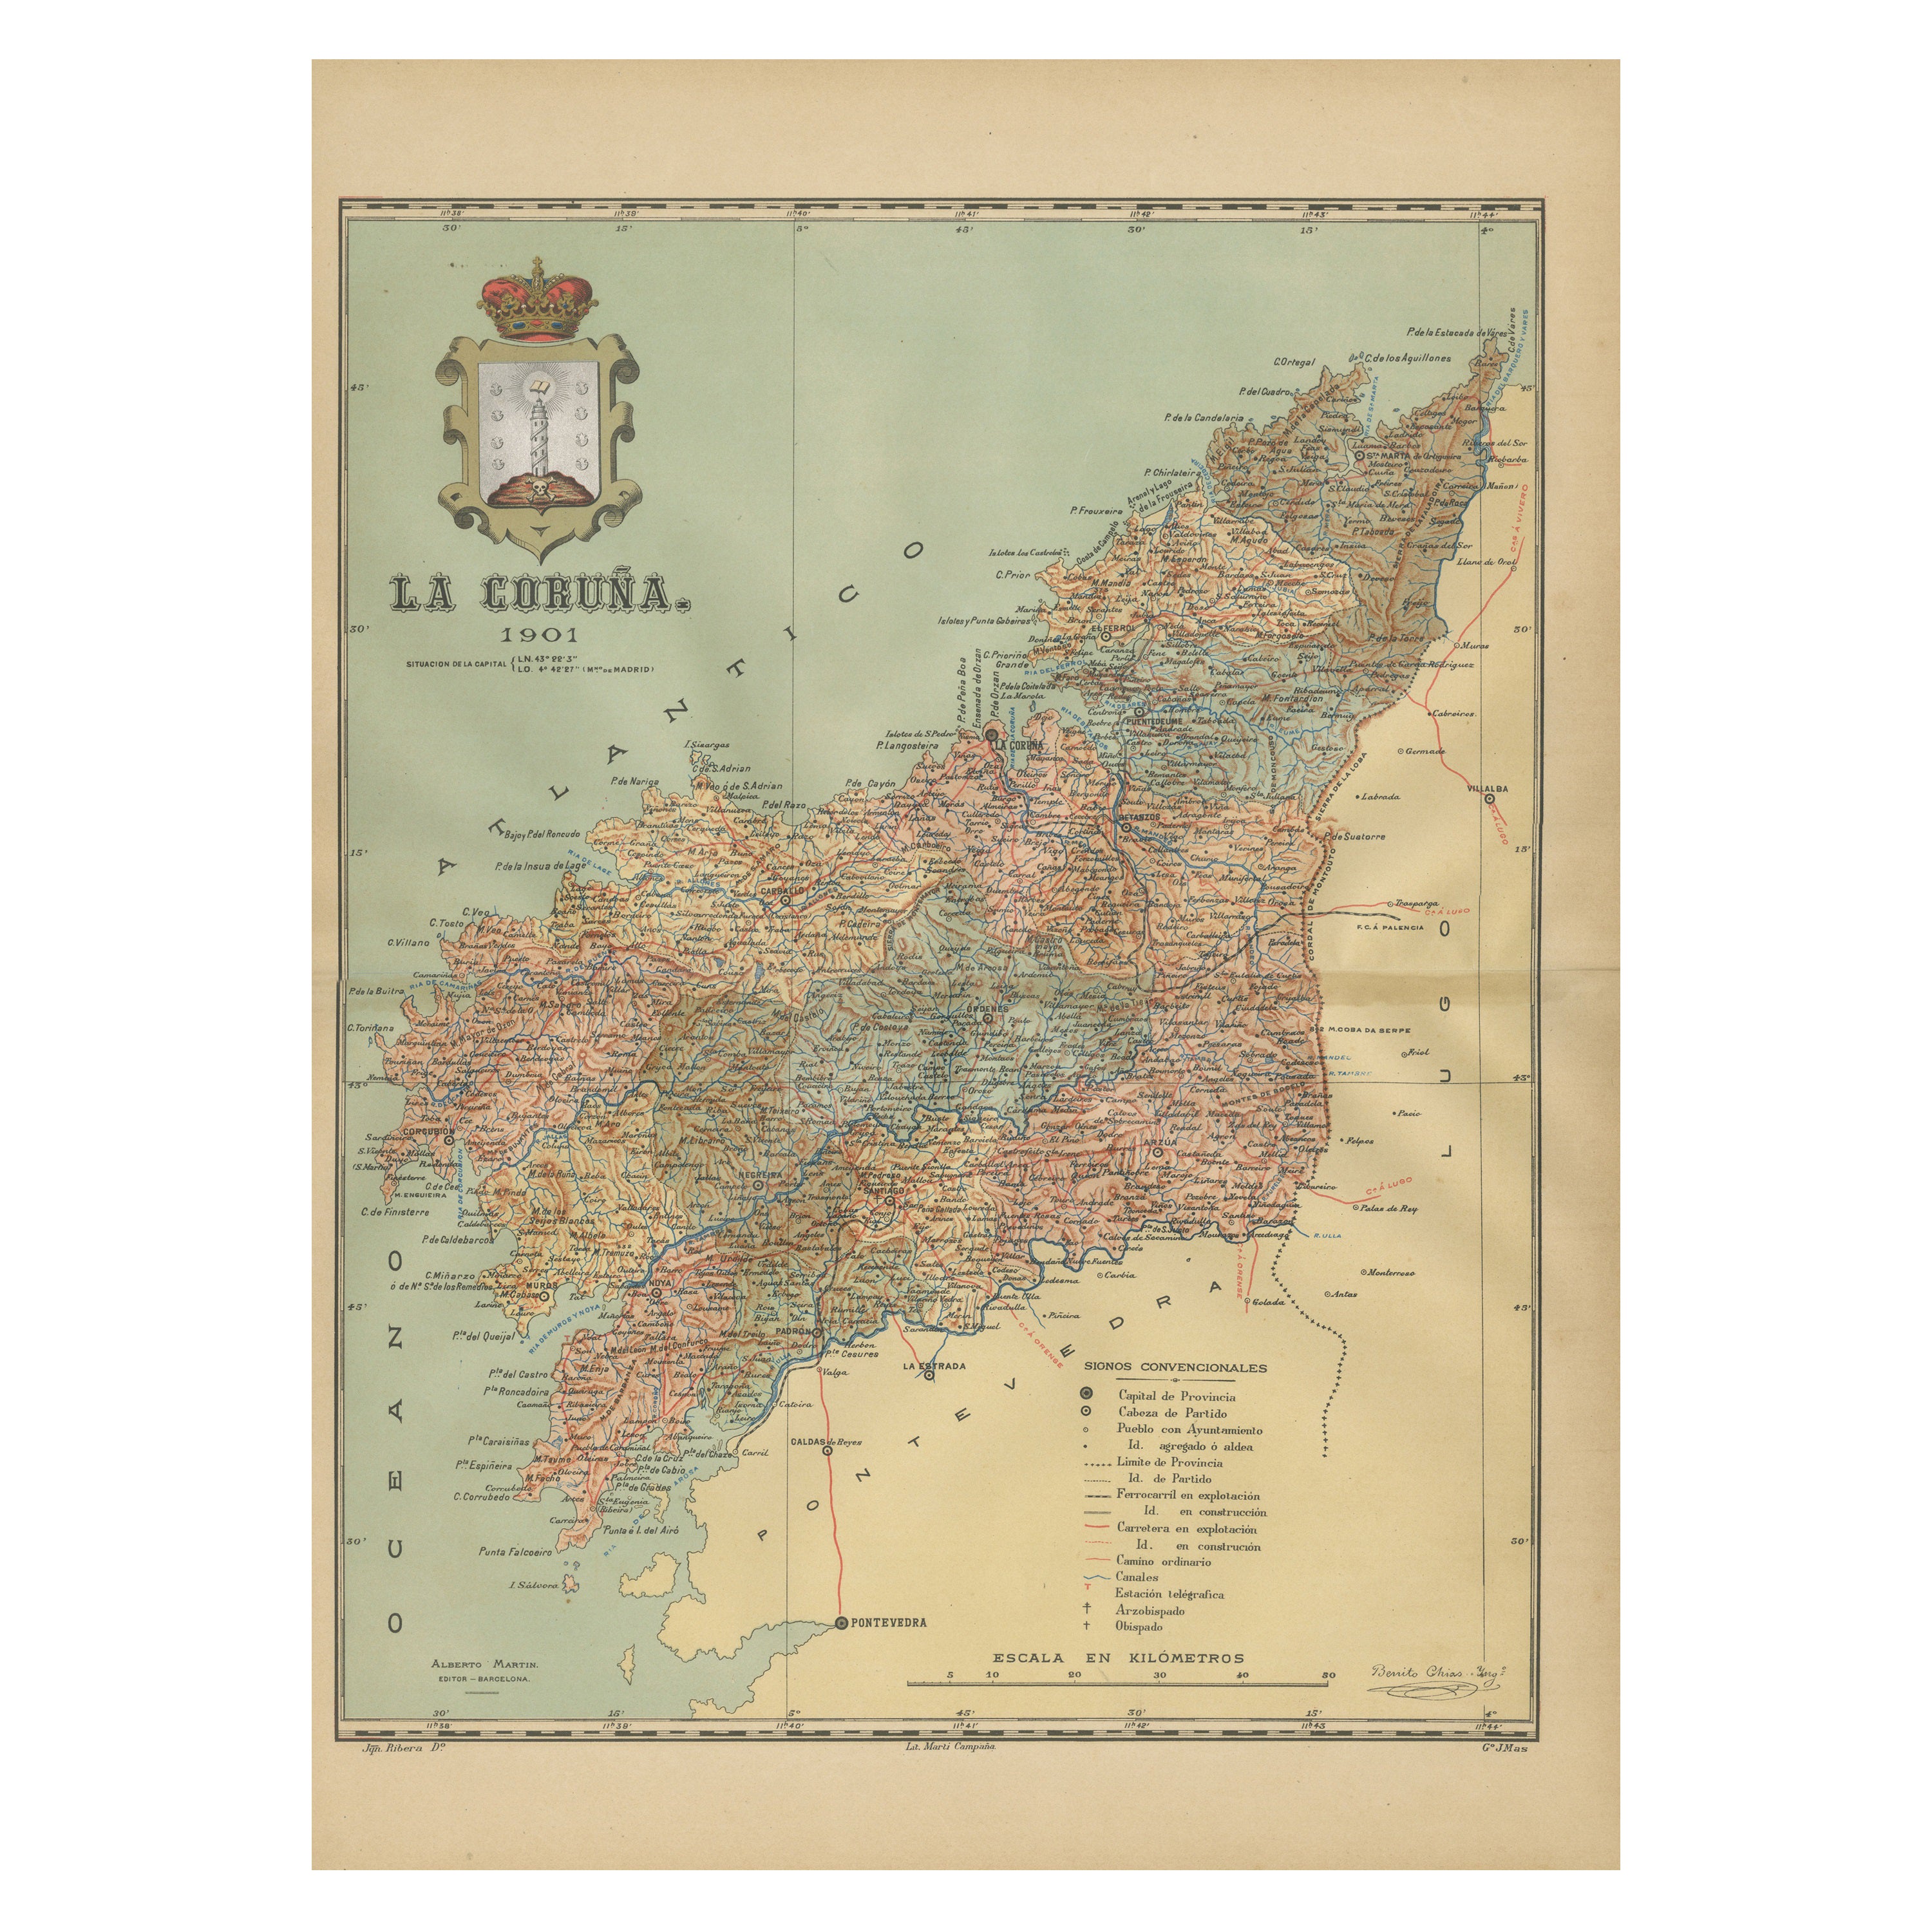 La Coruña 1901: A Cartographic View of Galicia's Maritime Province